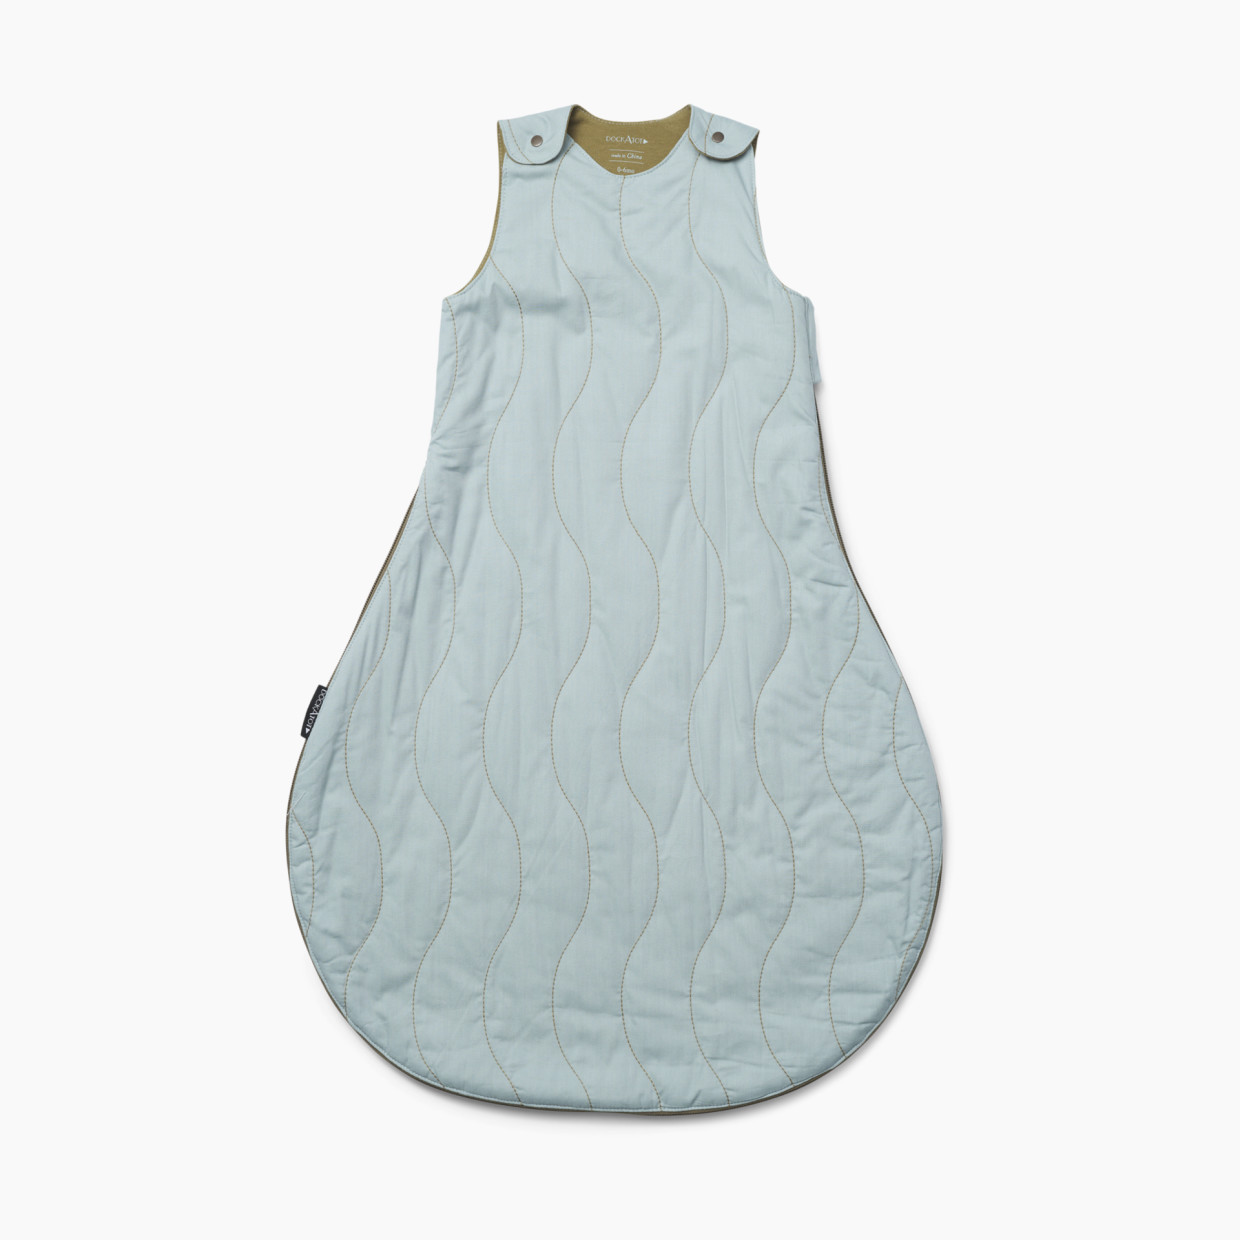 DockATot Sleep Bag TOG 2.5 - Blue Surf/Avocado, 6-18 M.